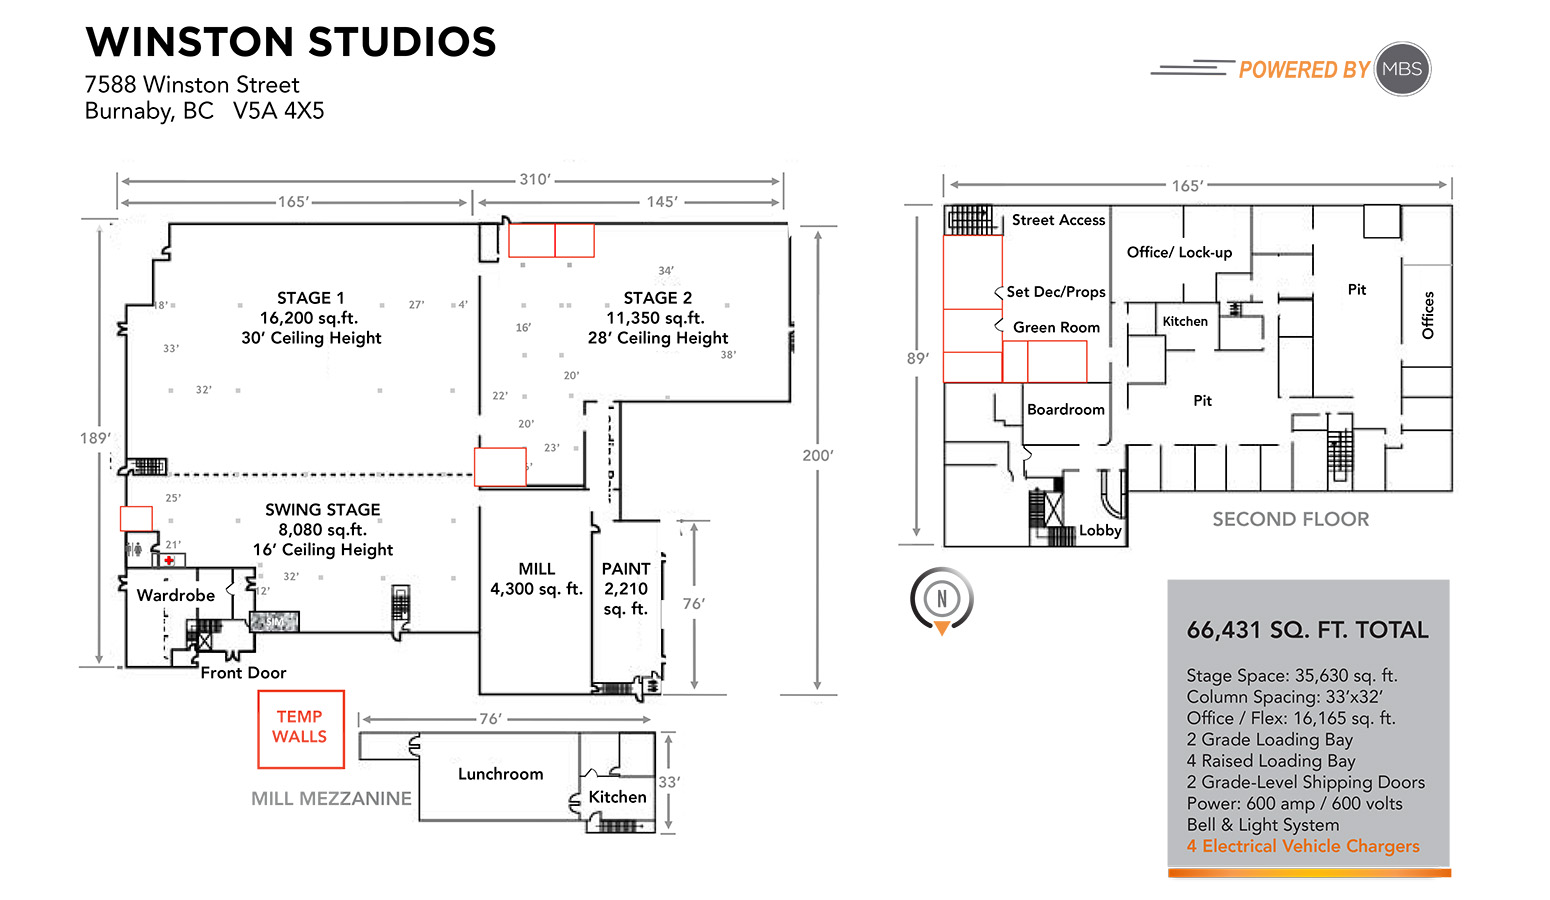 Winston Studio Floorplan - MBS Canada